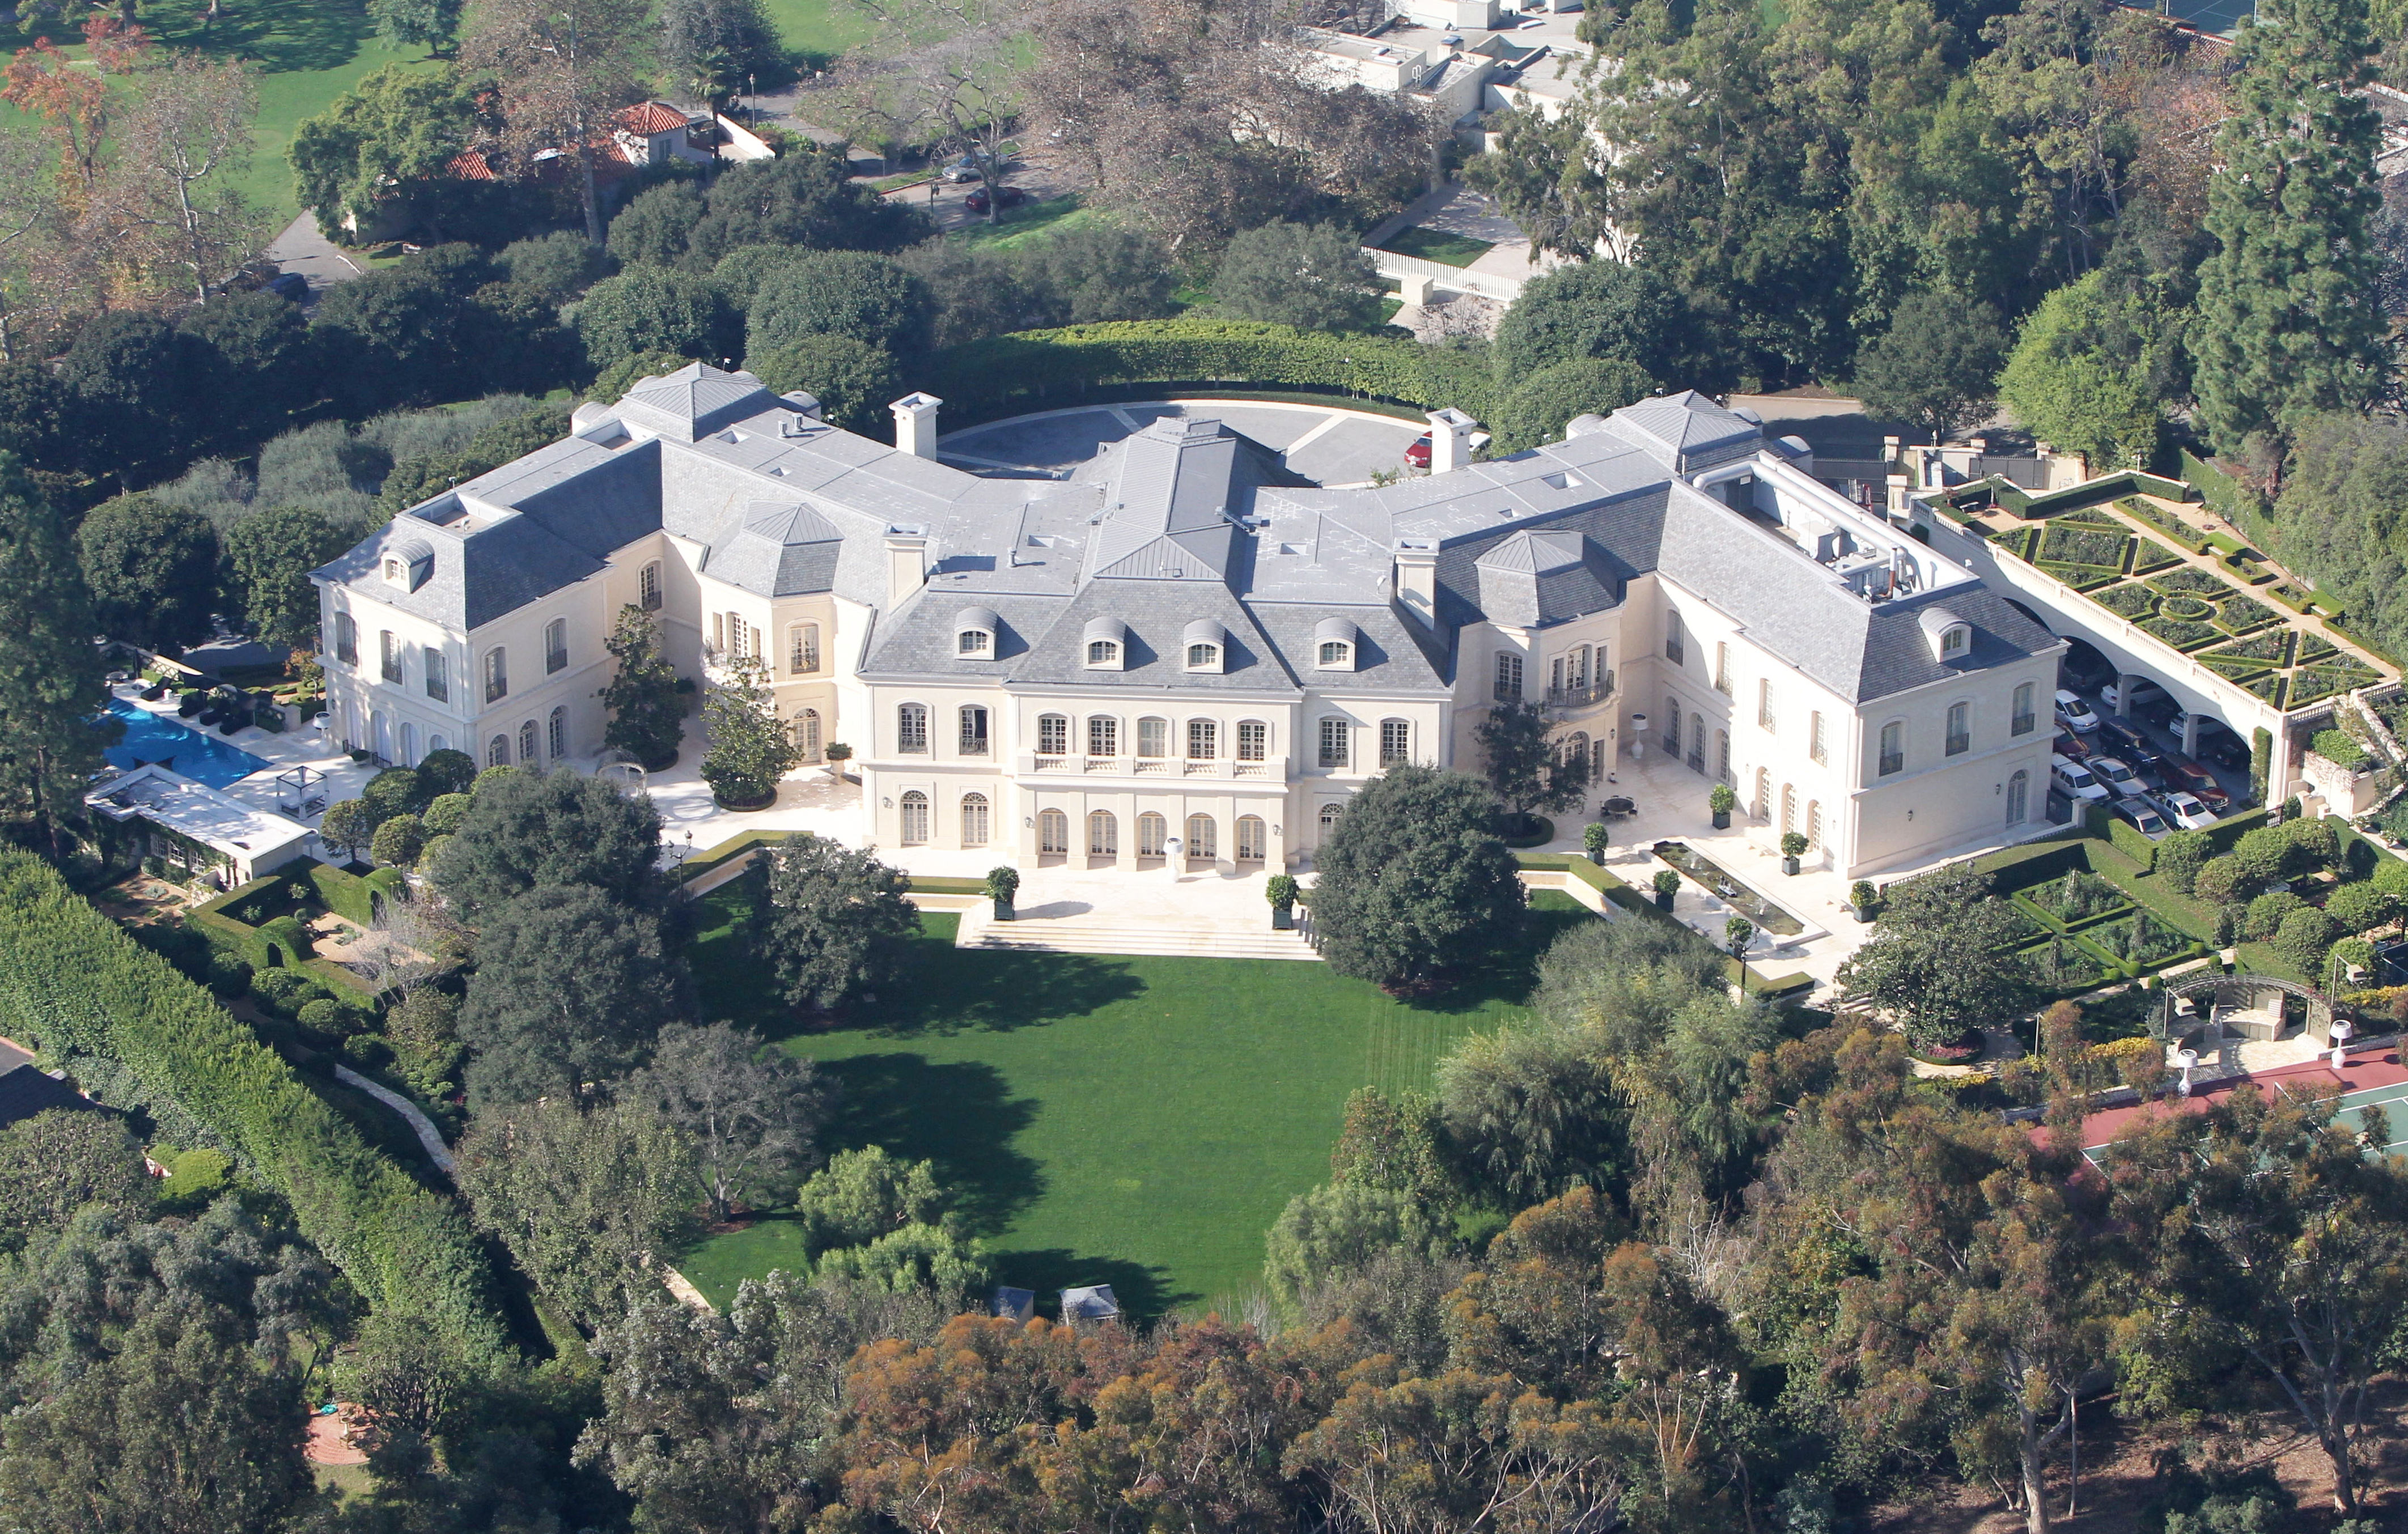 David και Victoria Beckham: Αυτό είναι το παλάτι που έχουν βάλει στο μάτι…